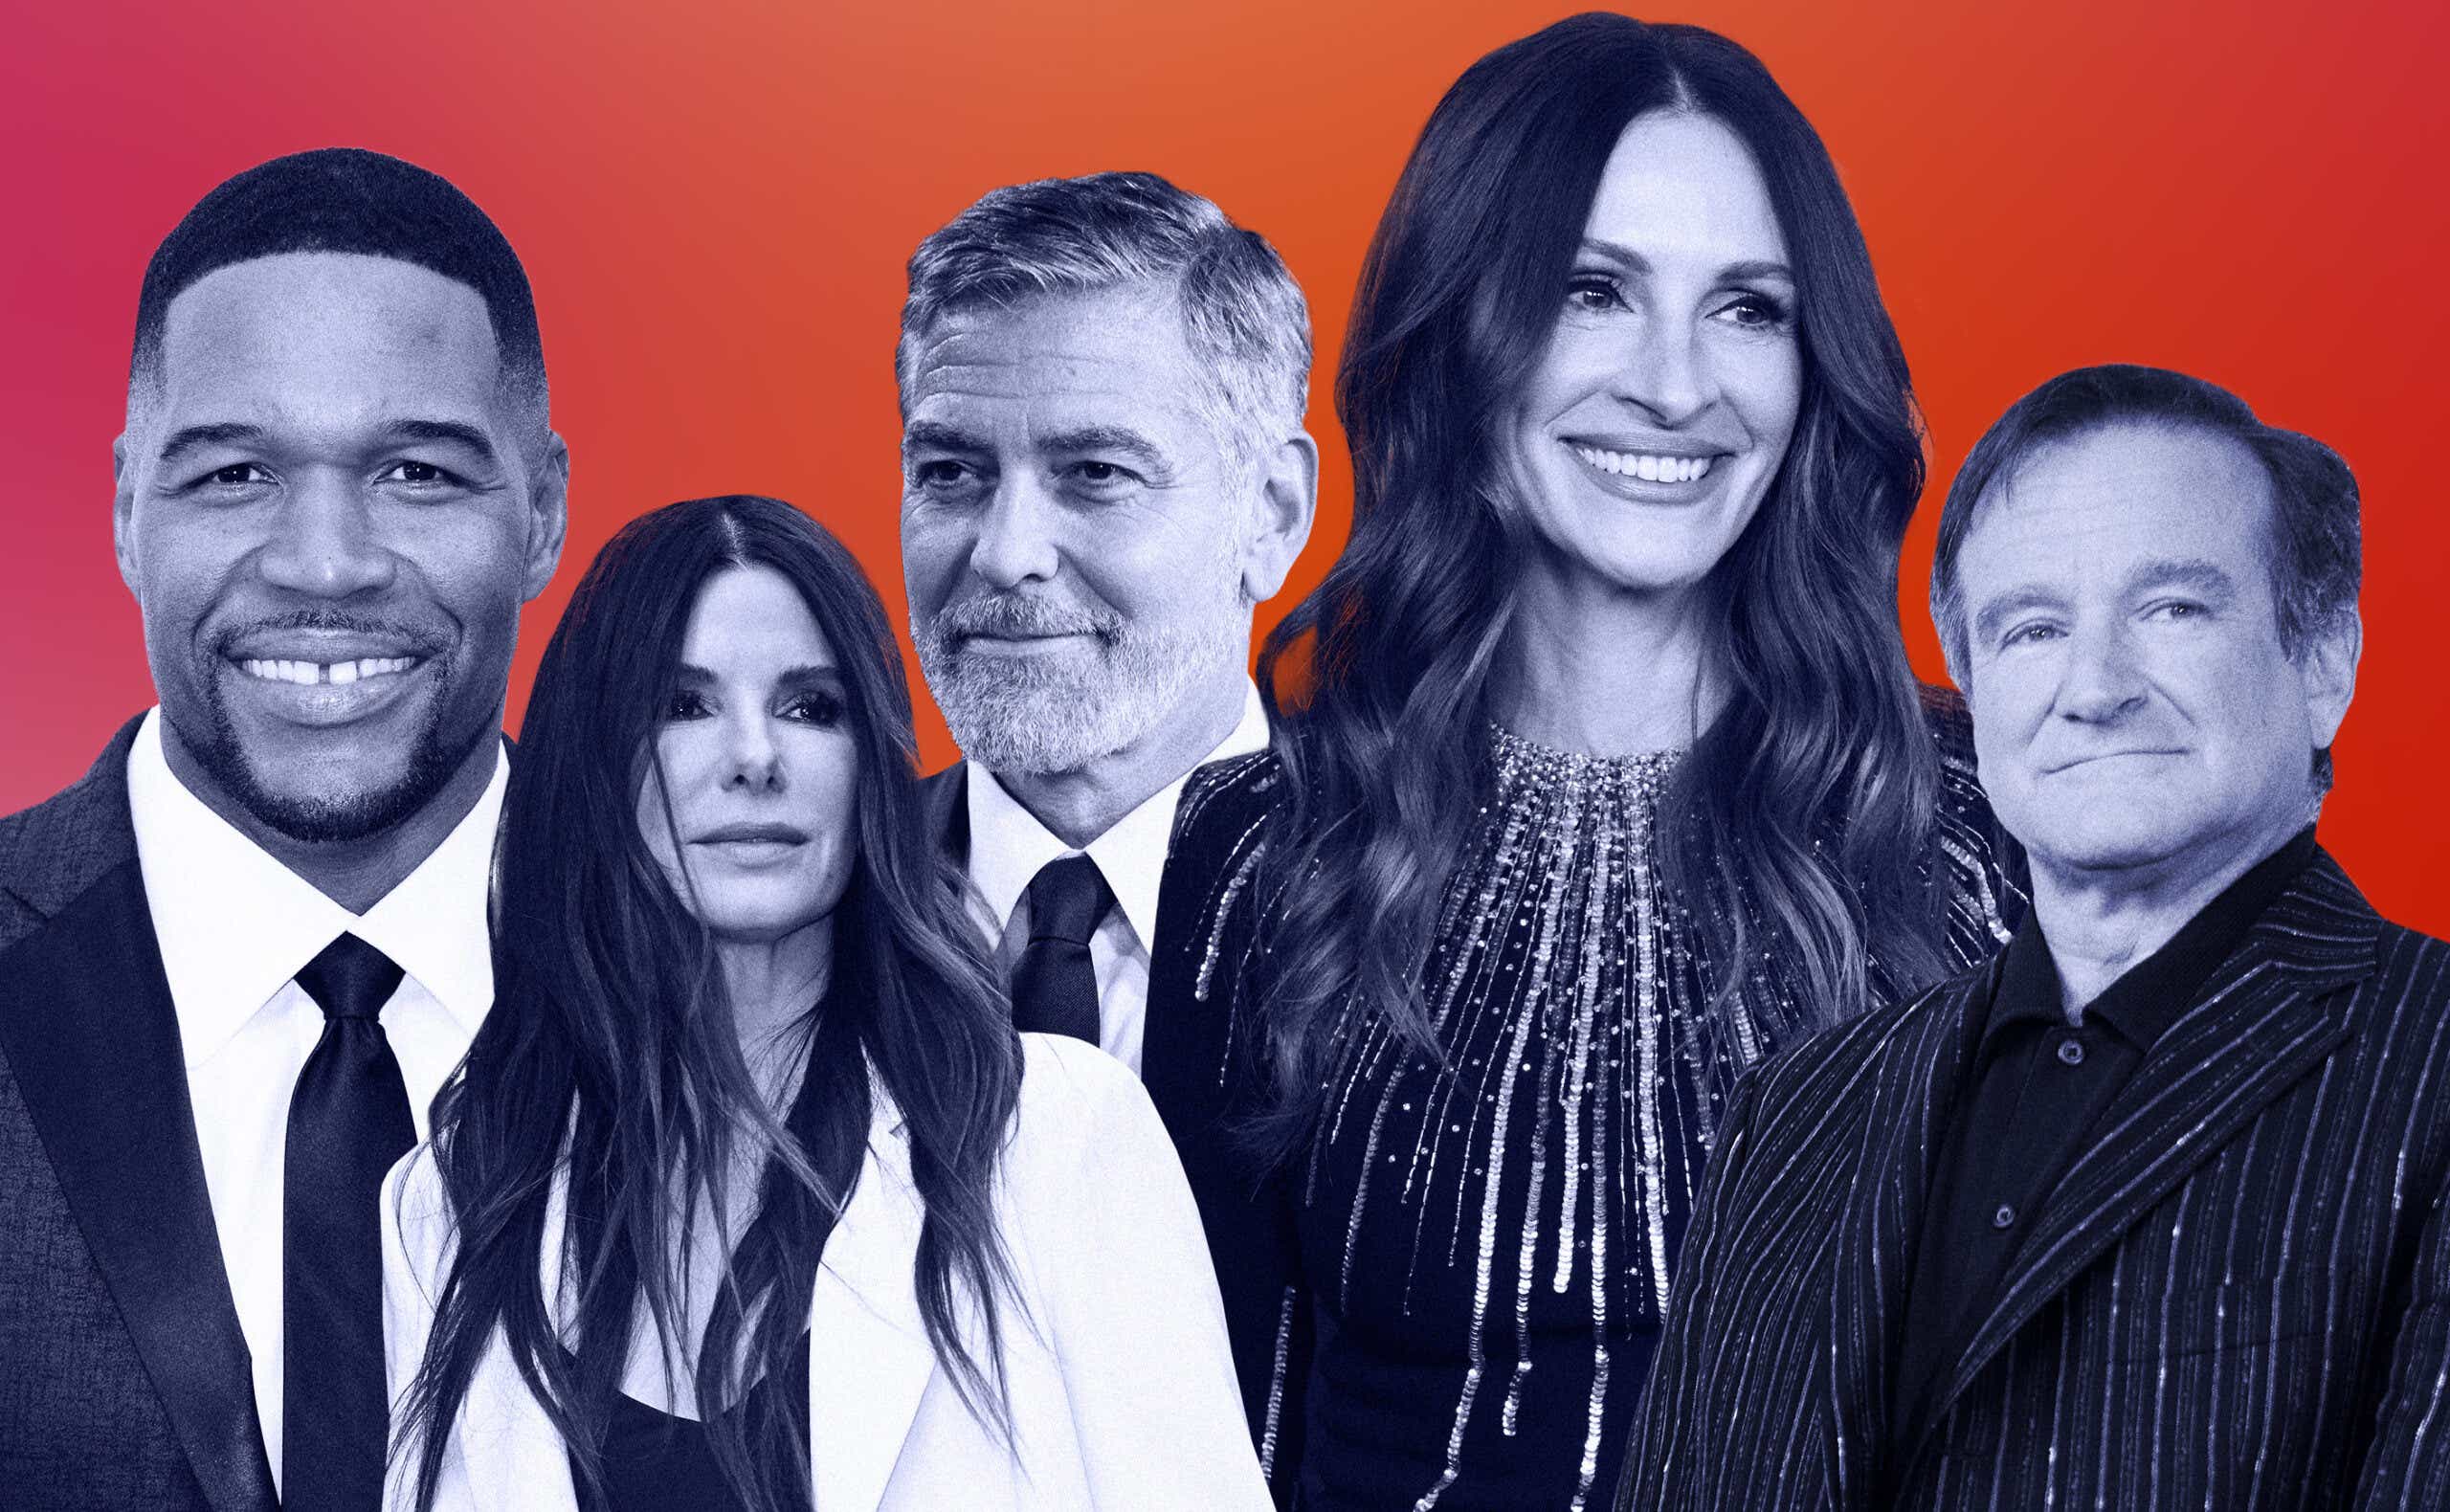 Celebrities at New York Fashion Week Spring 2020 Shows